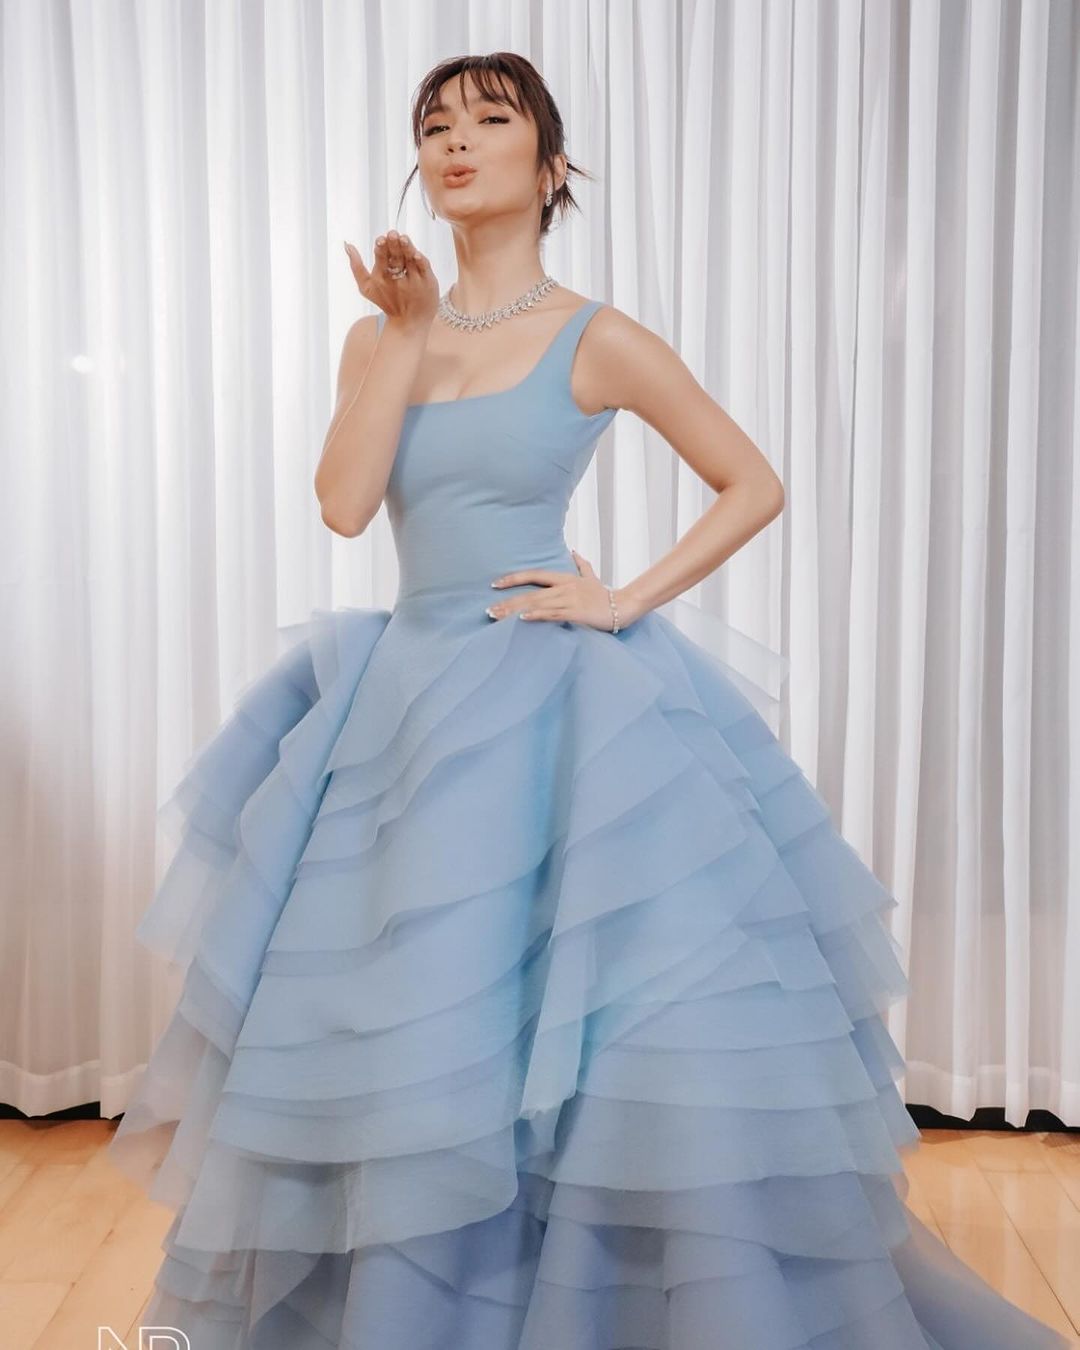 Francine Diaz Star Magical Prom Cinderella Boop Yap style blue gown fashion Anthony Ramirez